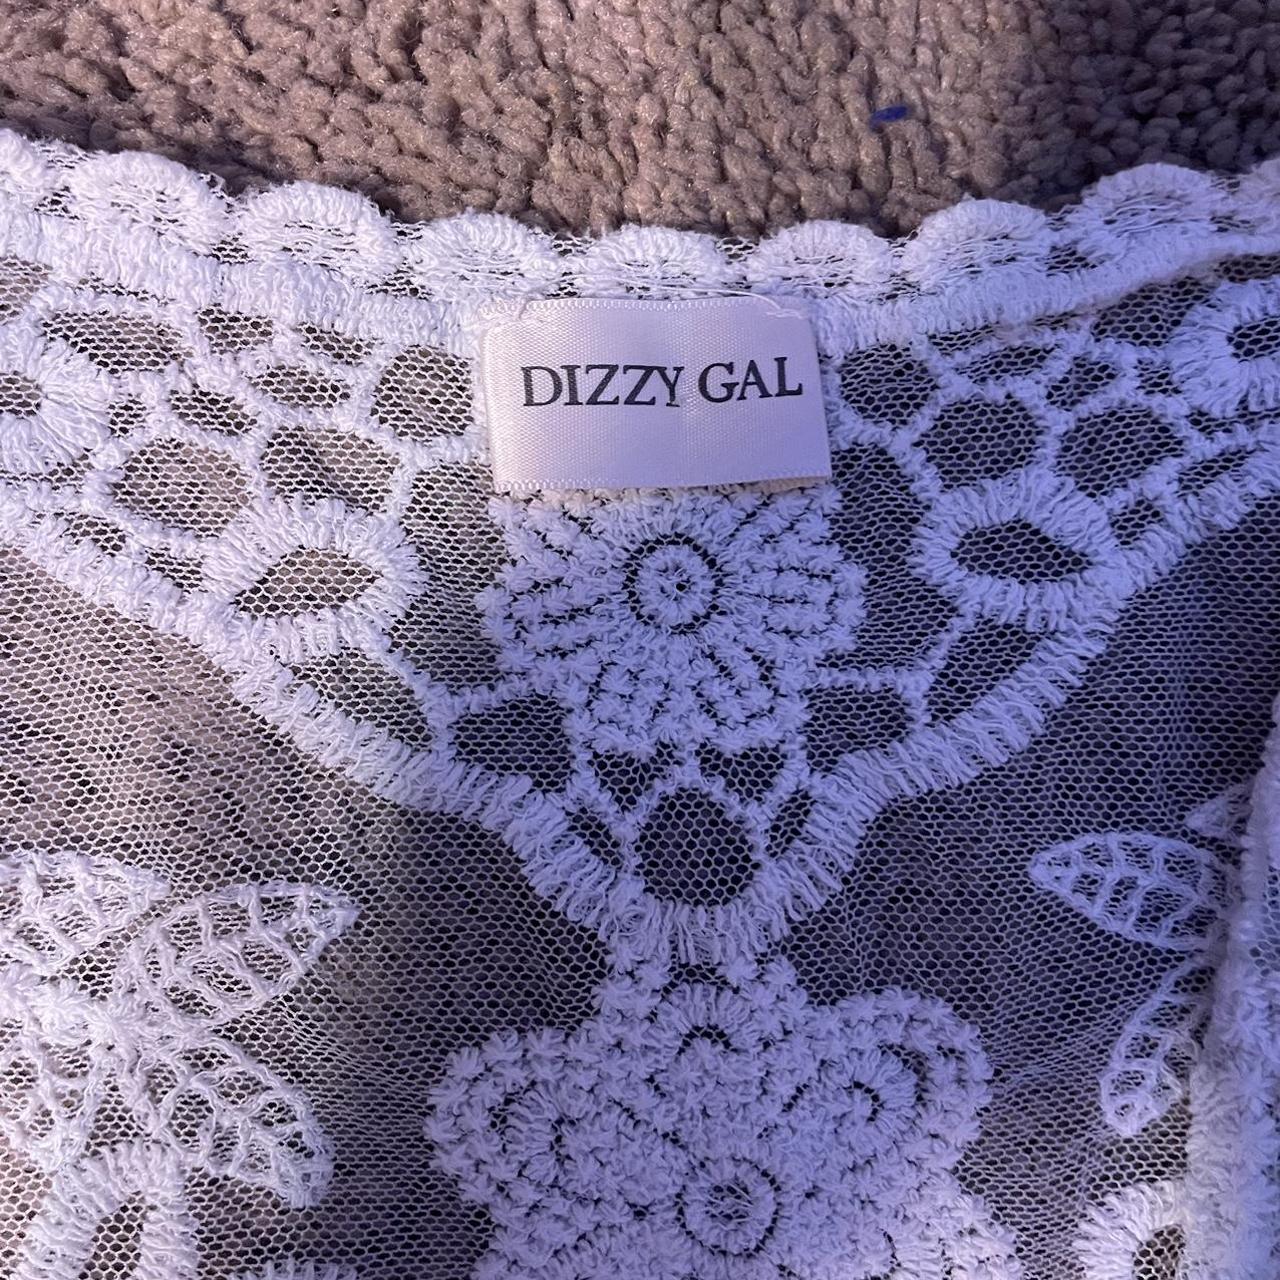 Dizzy Lizzy Women's White Top (2)